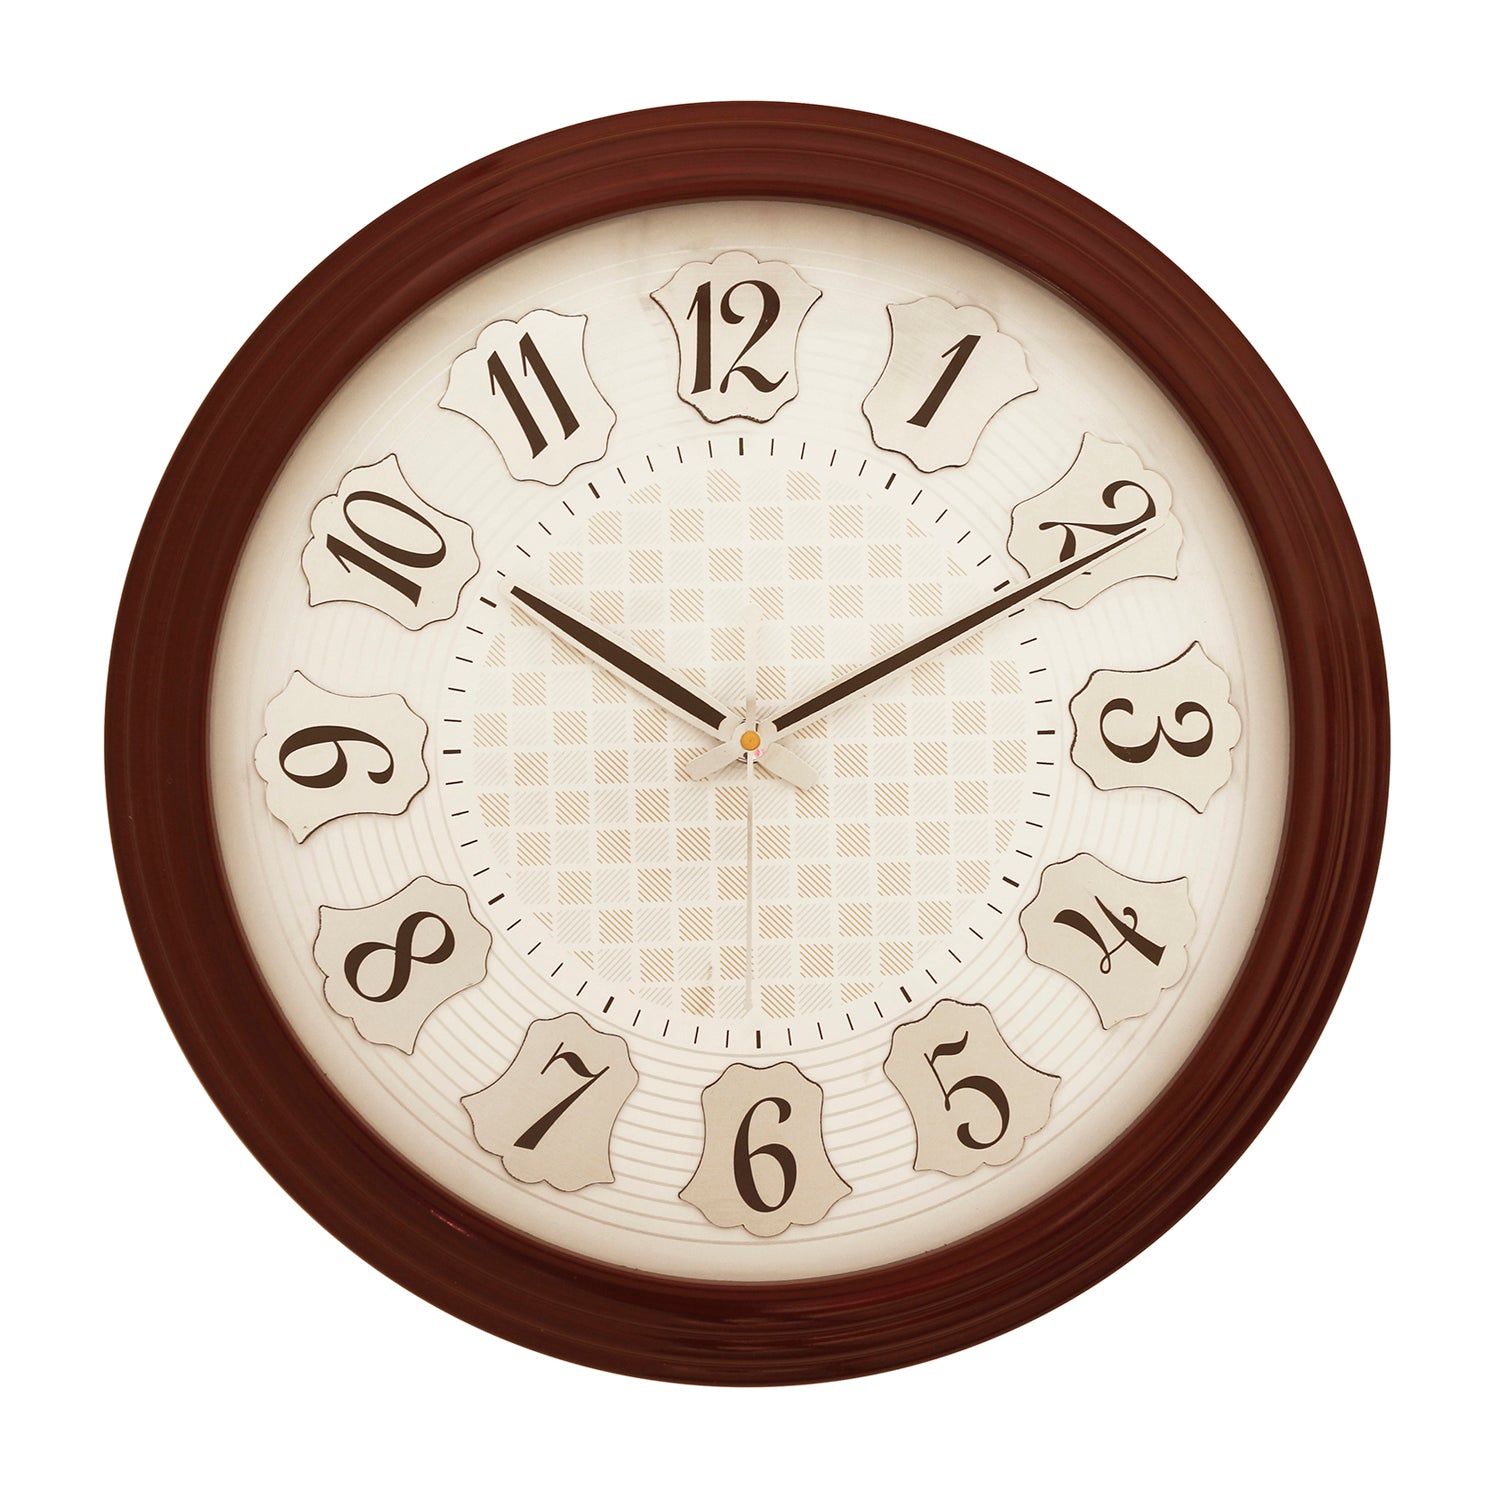 Cola Brown round wooden analog wall clock(33 cm x 33 cm)